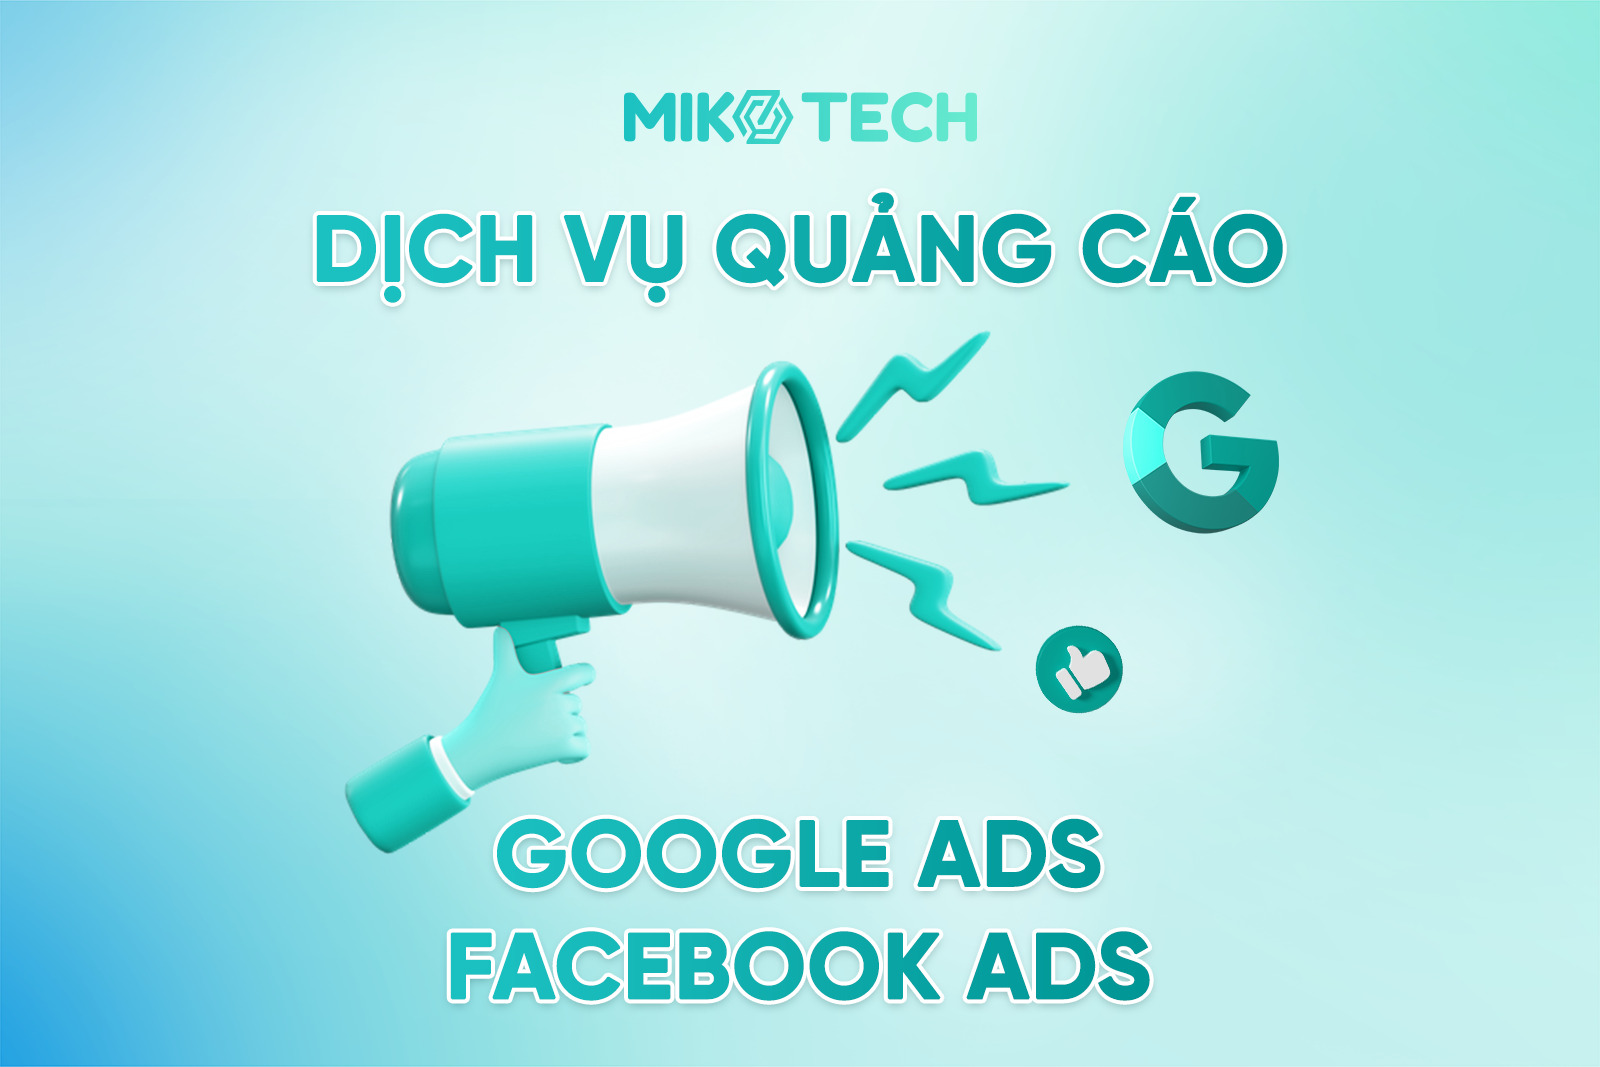 Quảng cáo Google/Facebook (Ads)